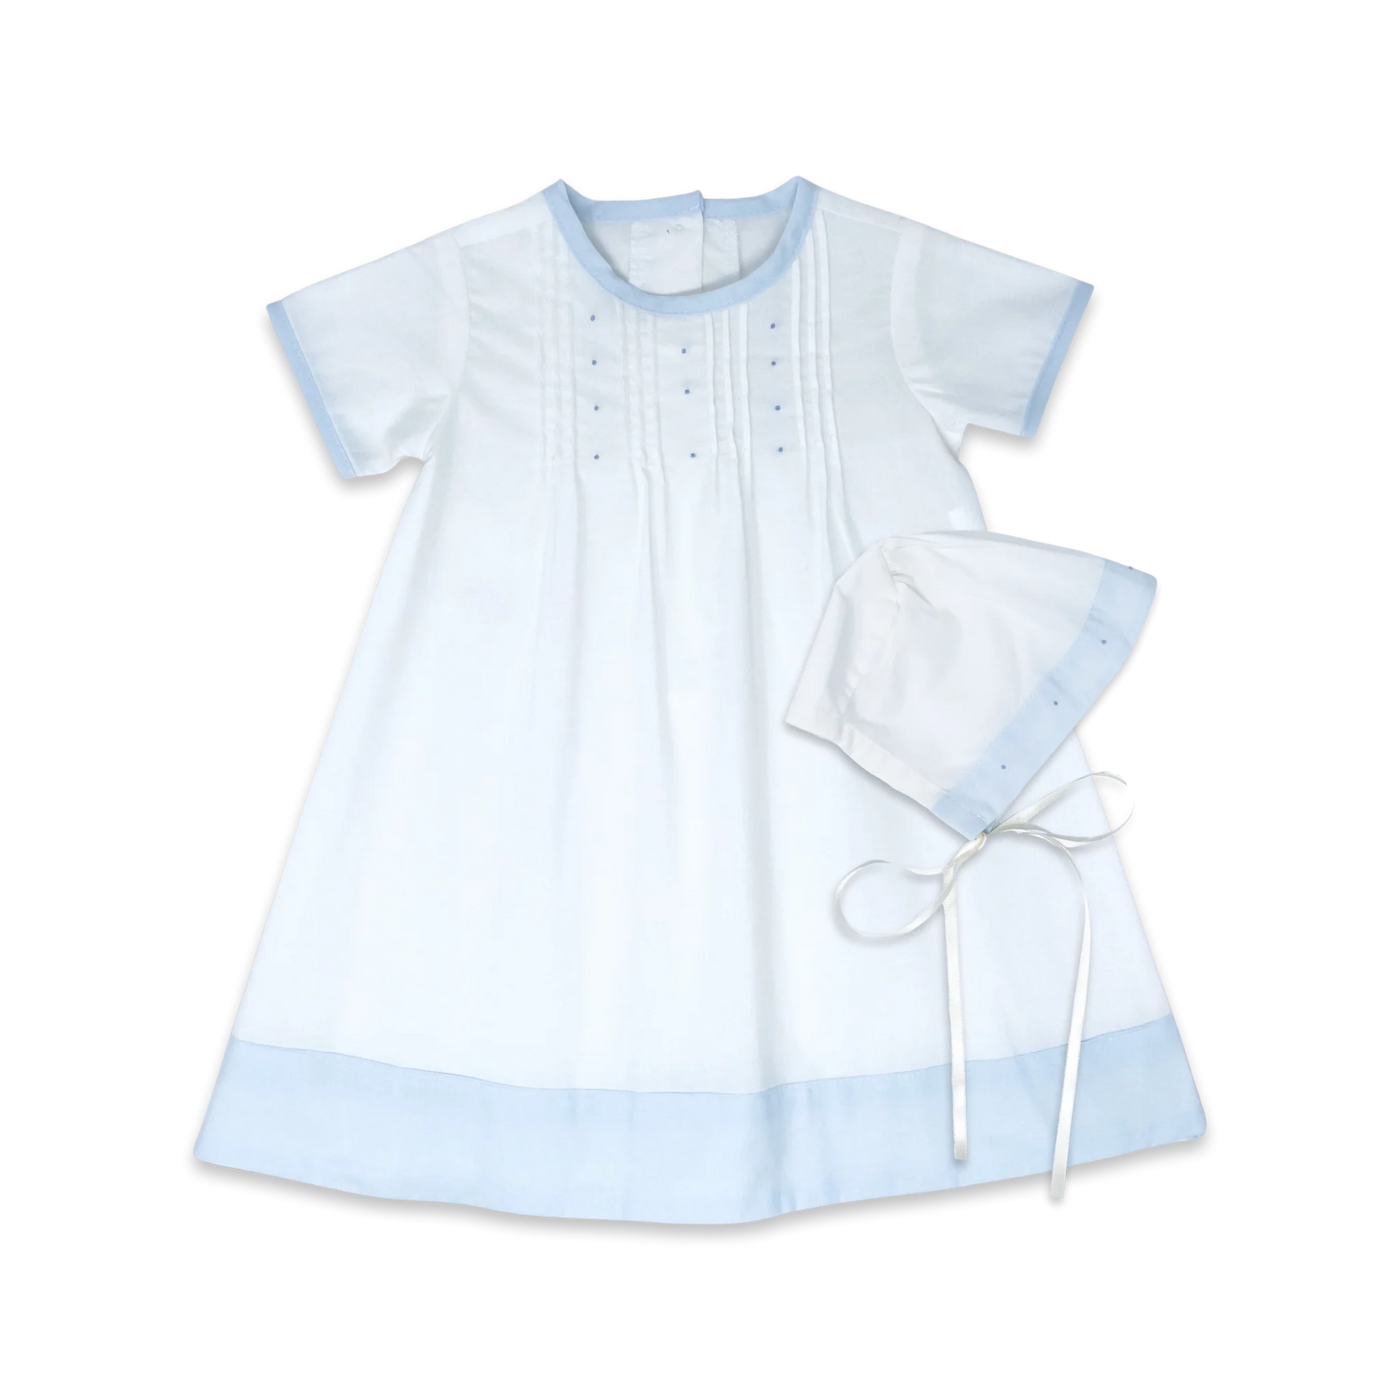 Newborn 1956 Daygown - Blessings White, Blue Batiste - Breckenridge Baby